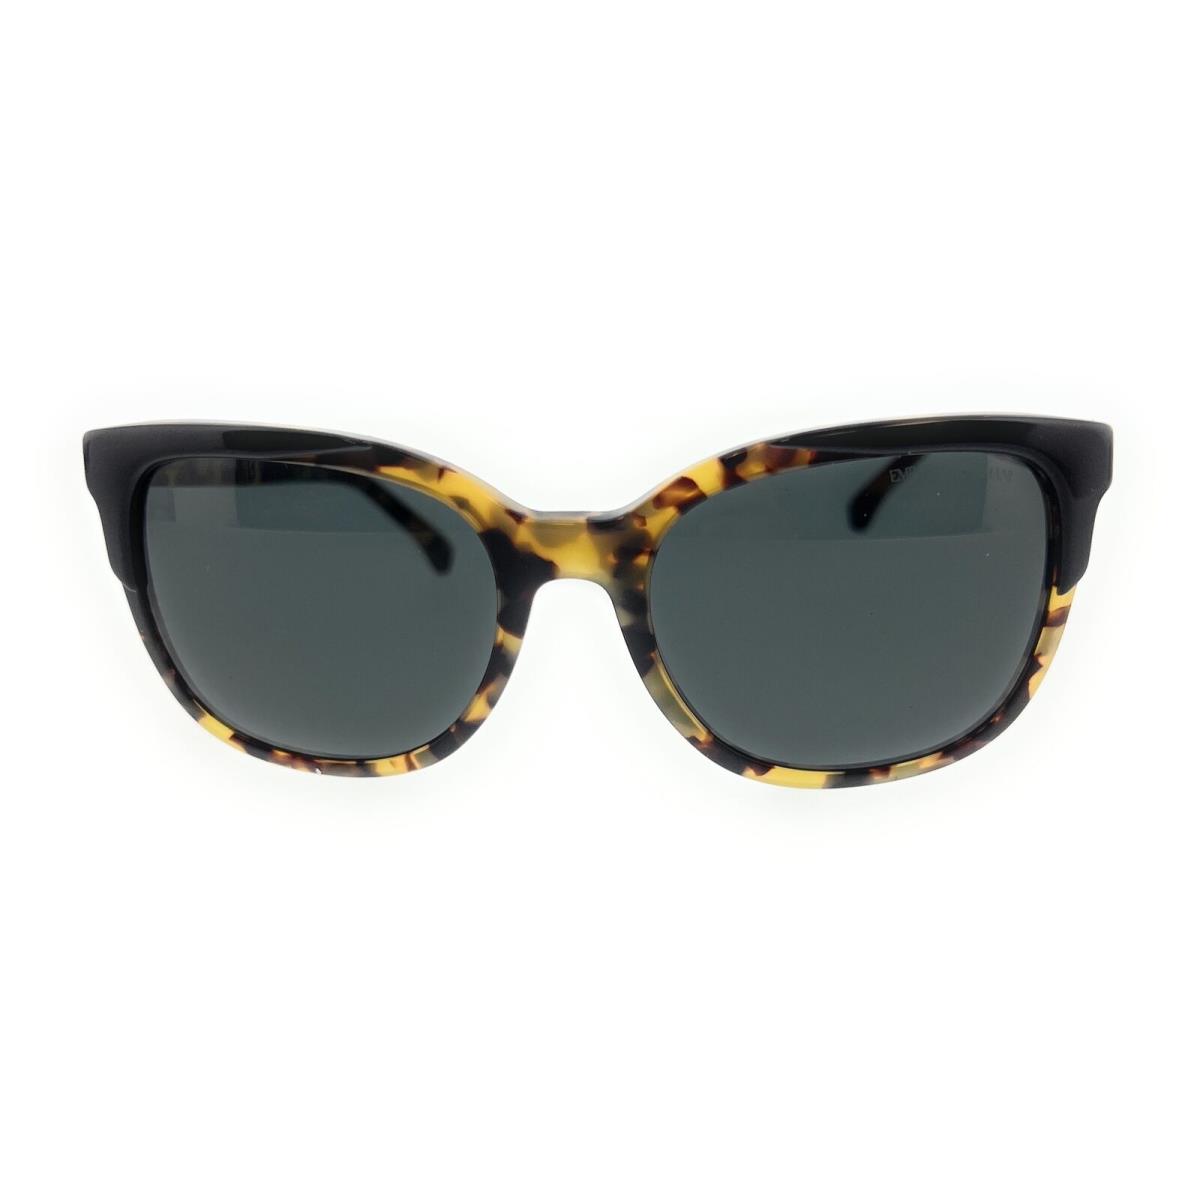 Emporio Armani 0EA4119 569787 Top Black On Havana Square Sunglasses